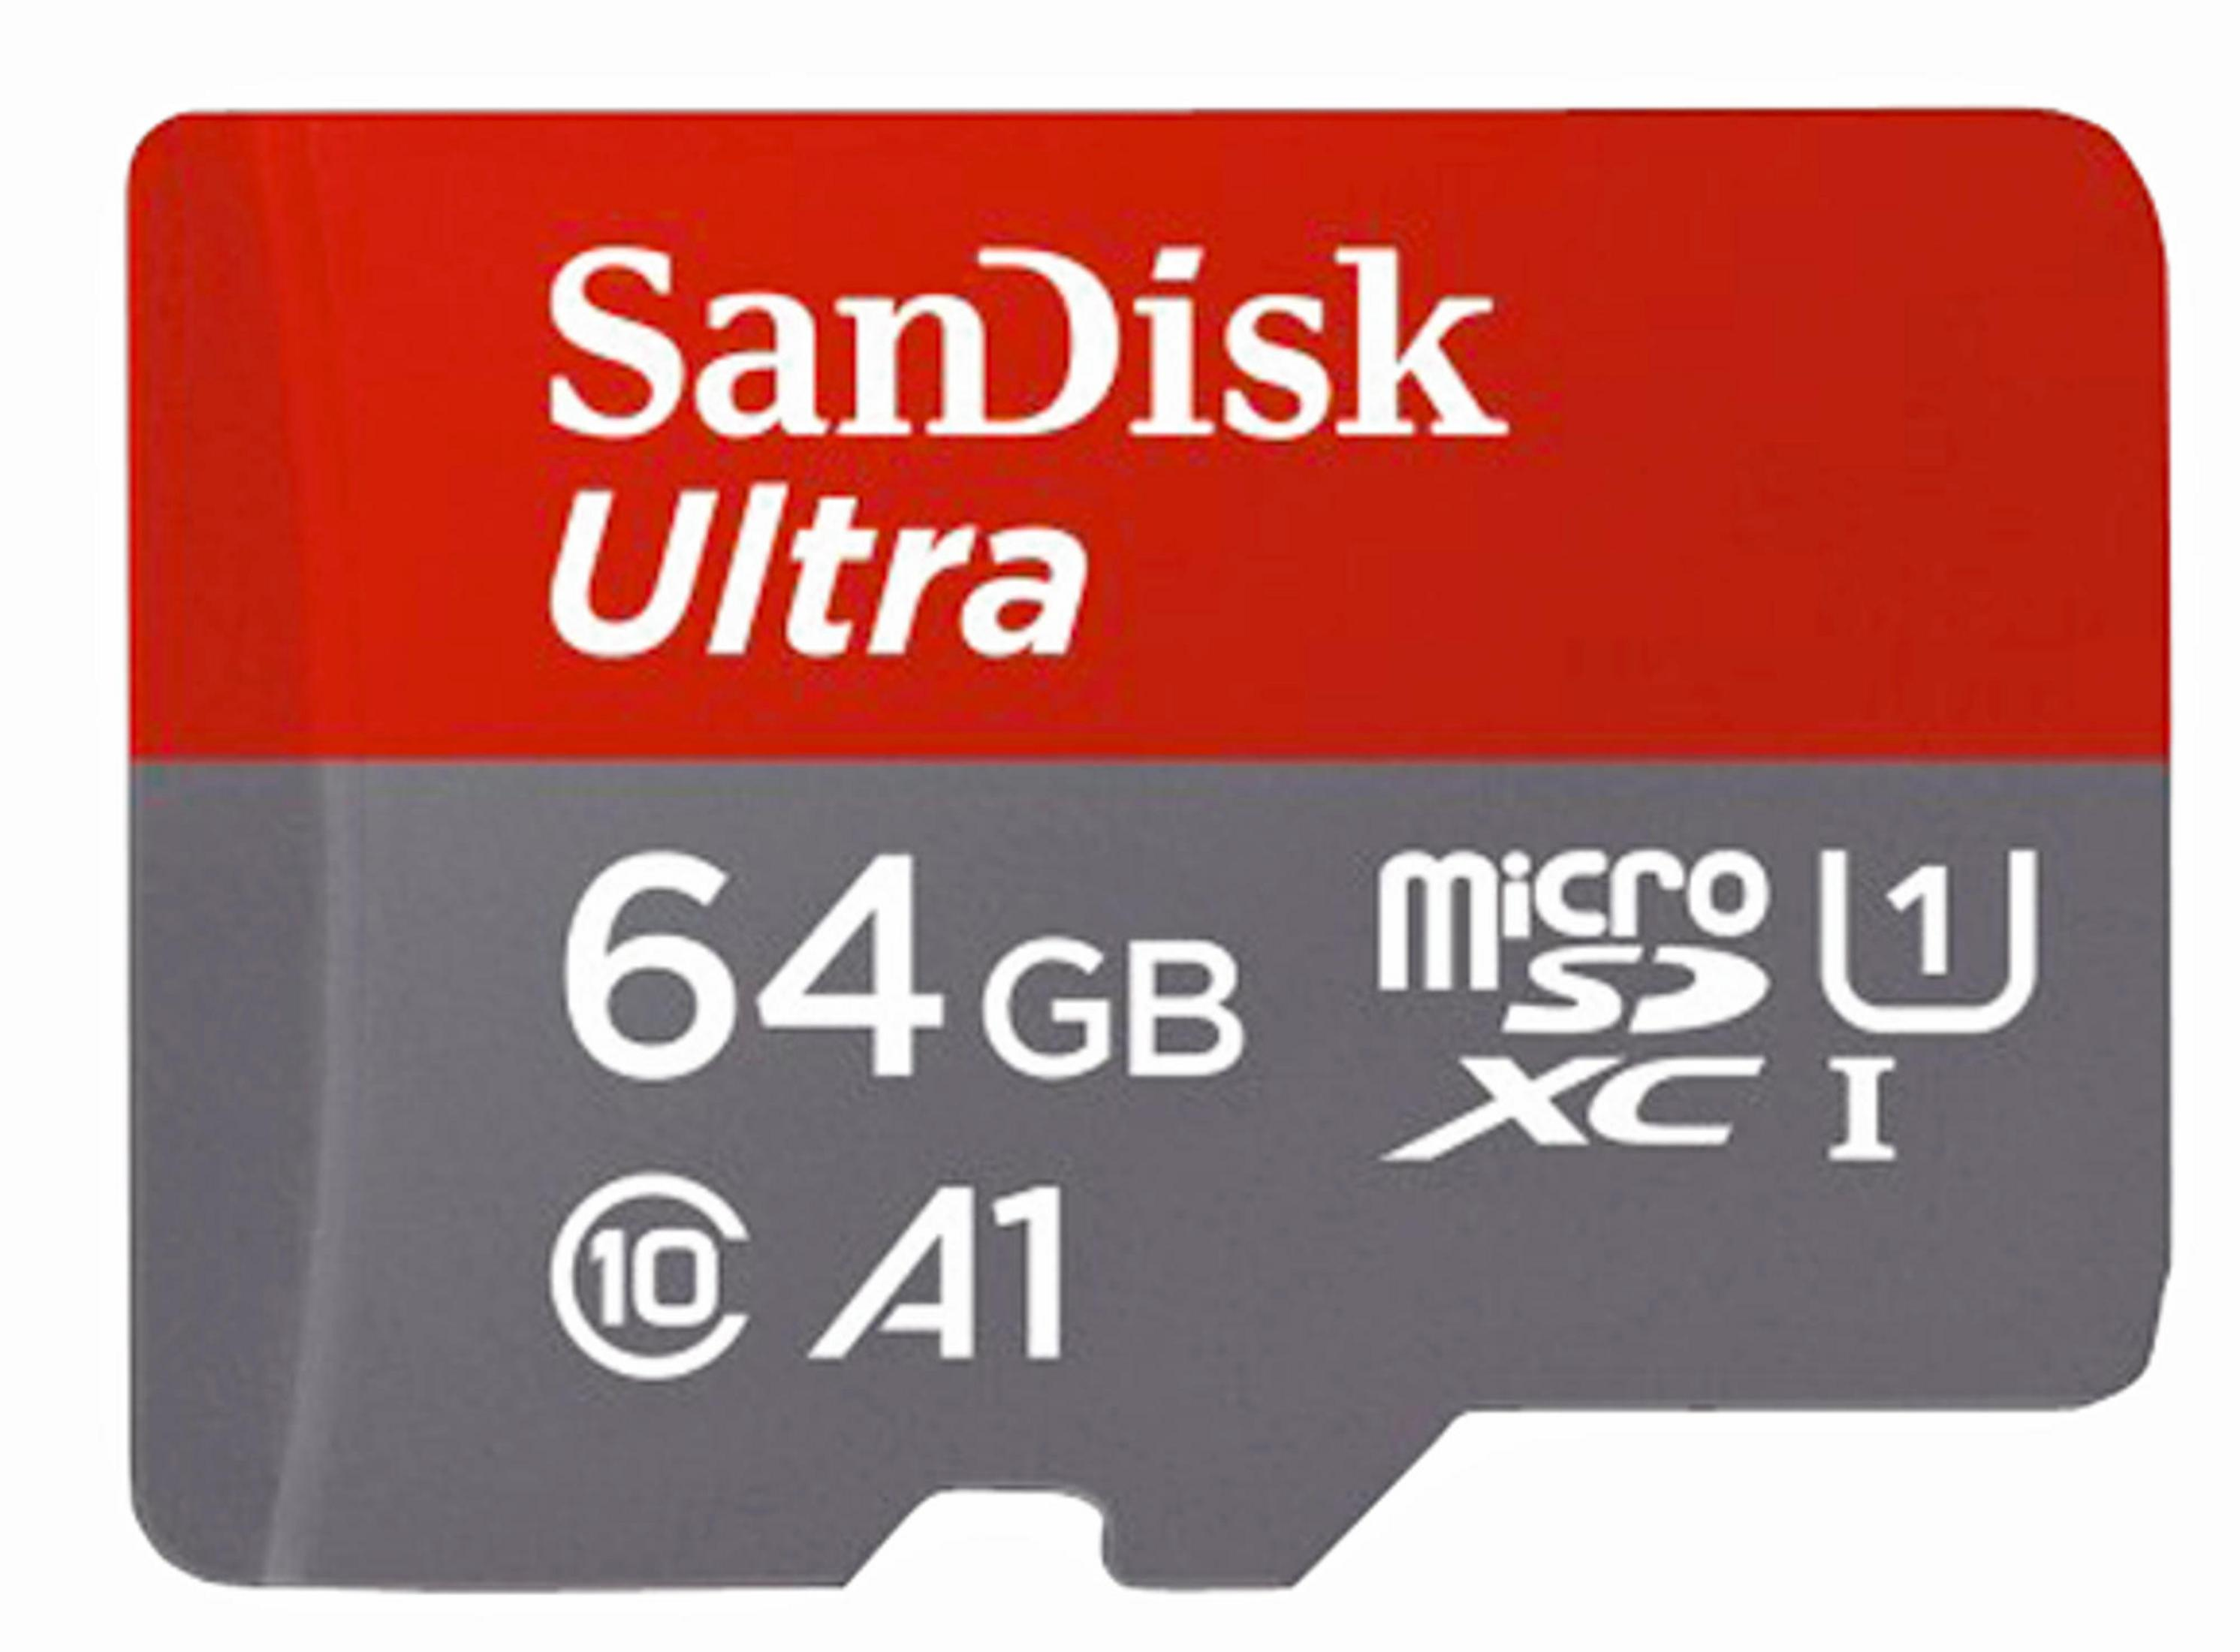 MB/s 64GB 64 100 MSDXC 173448 GB, SANDISK Micro-SDXC (100MB/S,UH, ULTRA Speicherkarte,